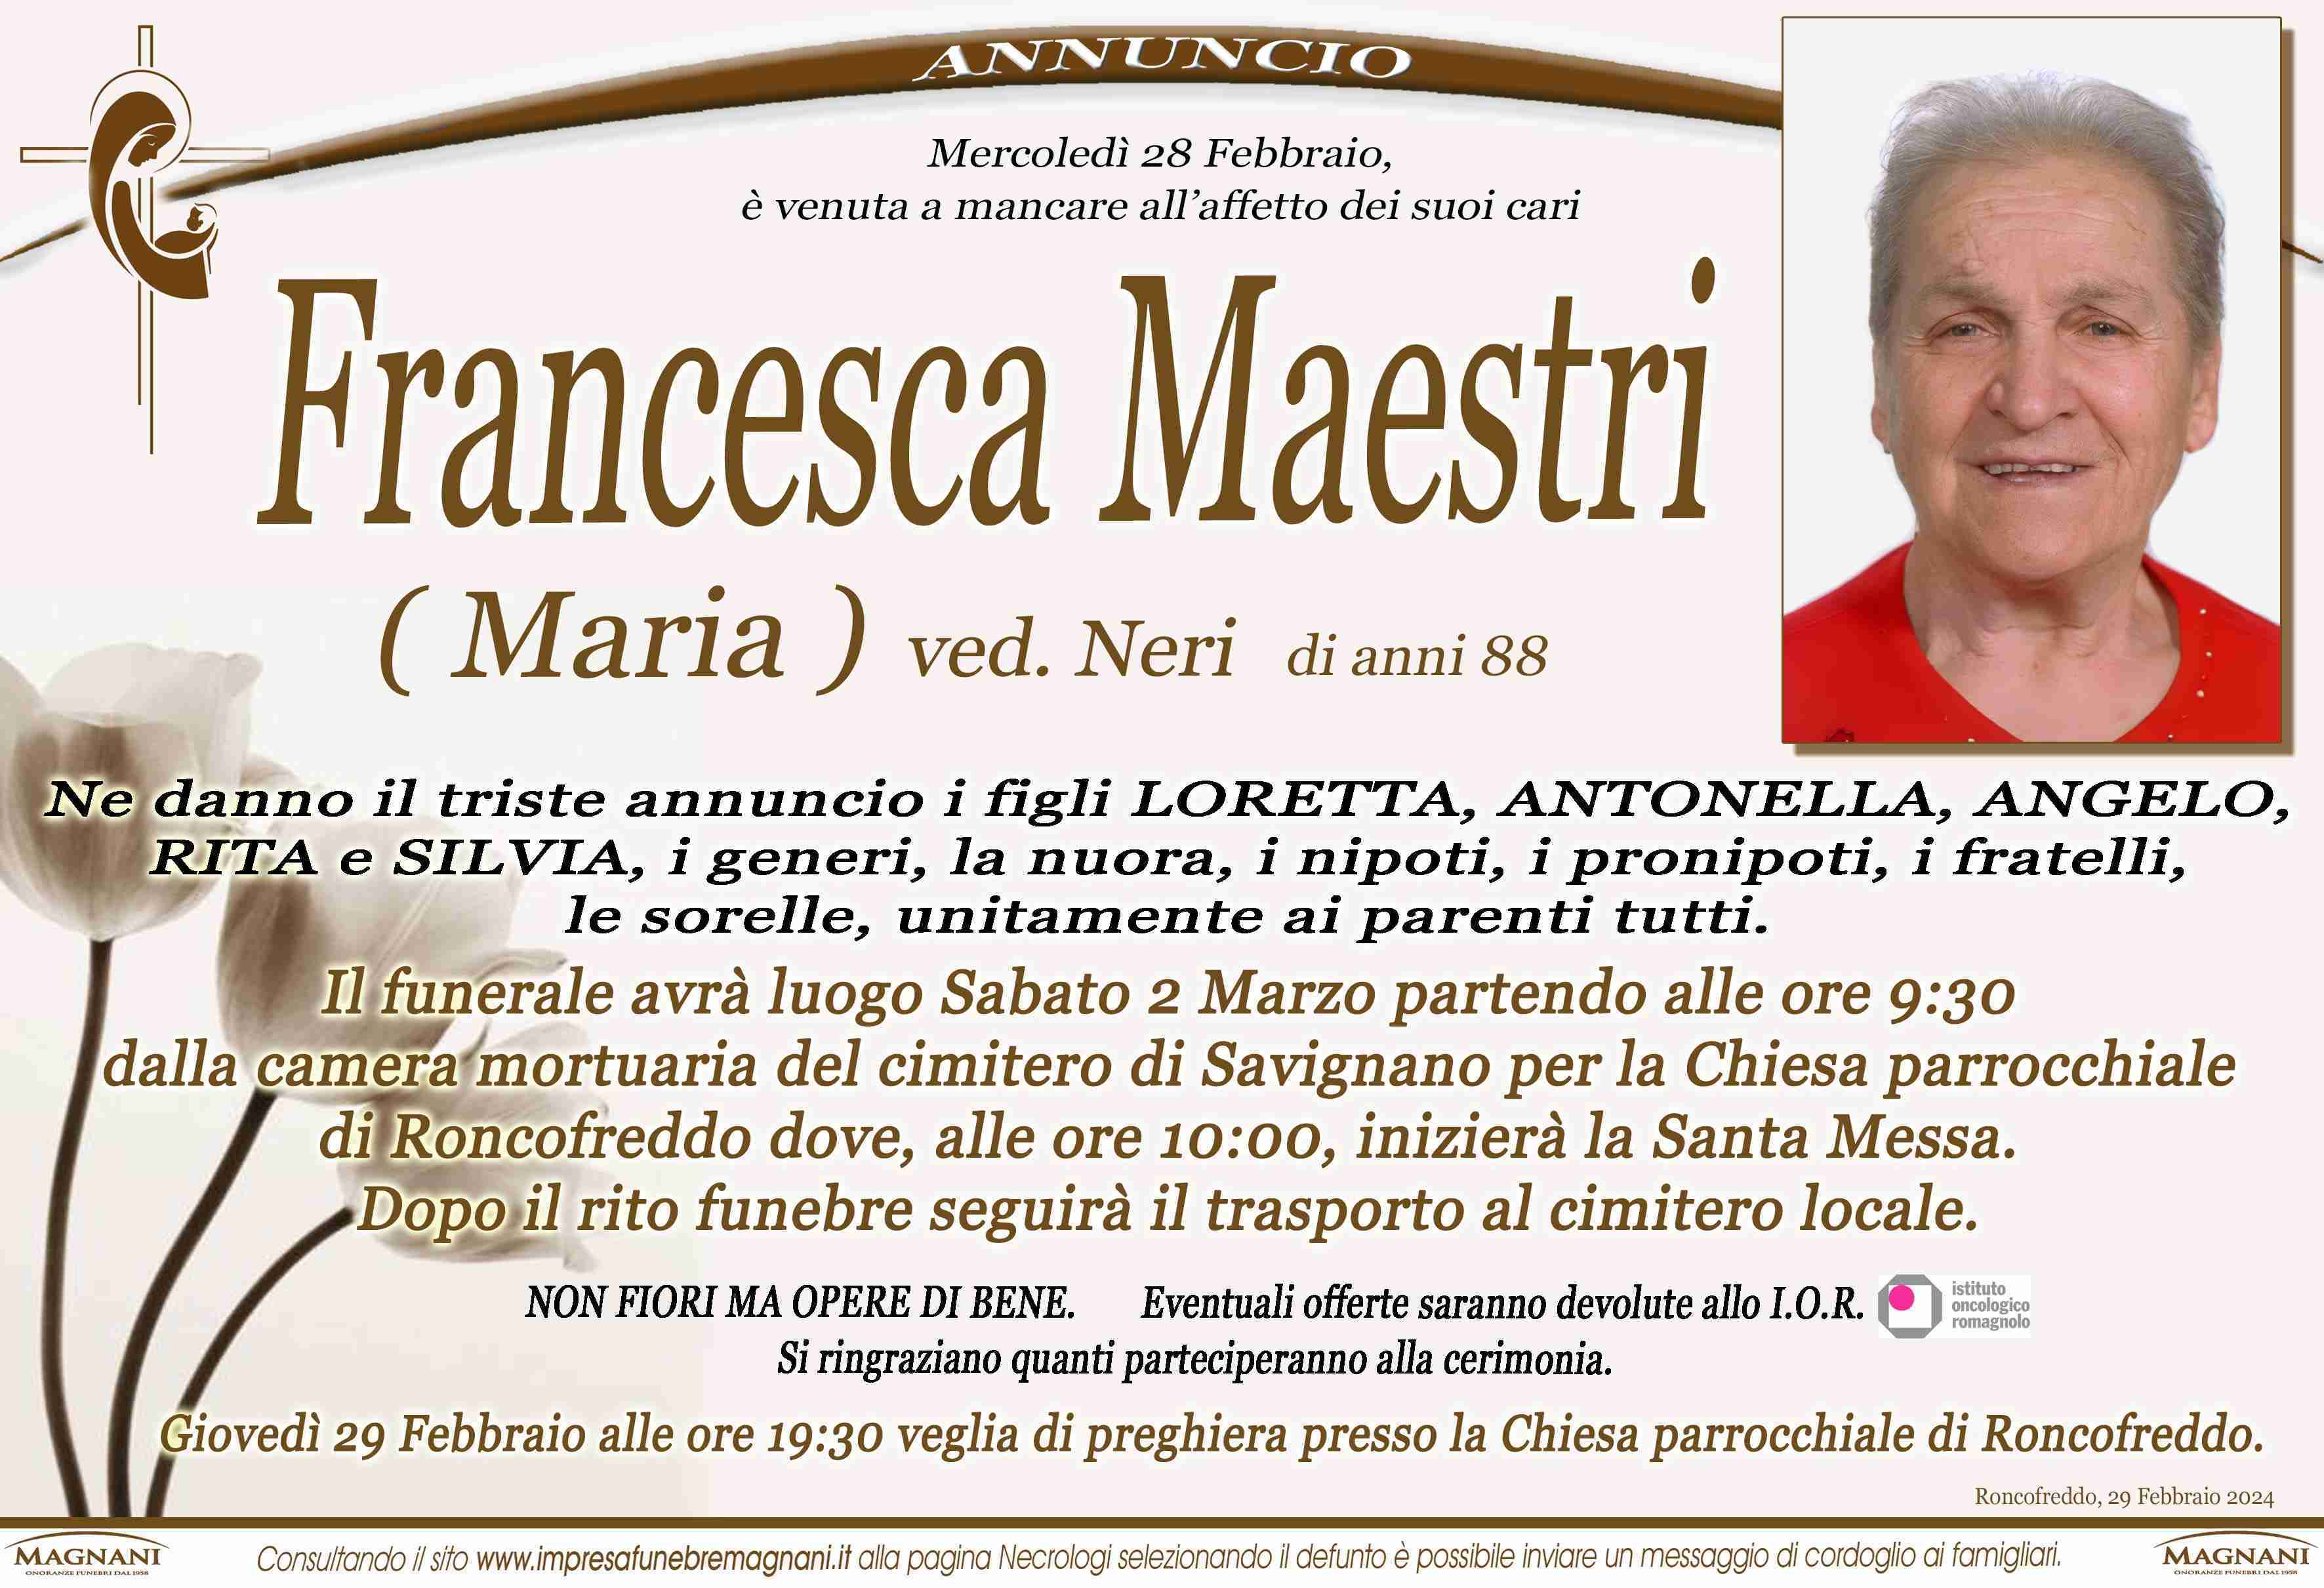 Francesca Maestri (Maria)